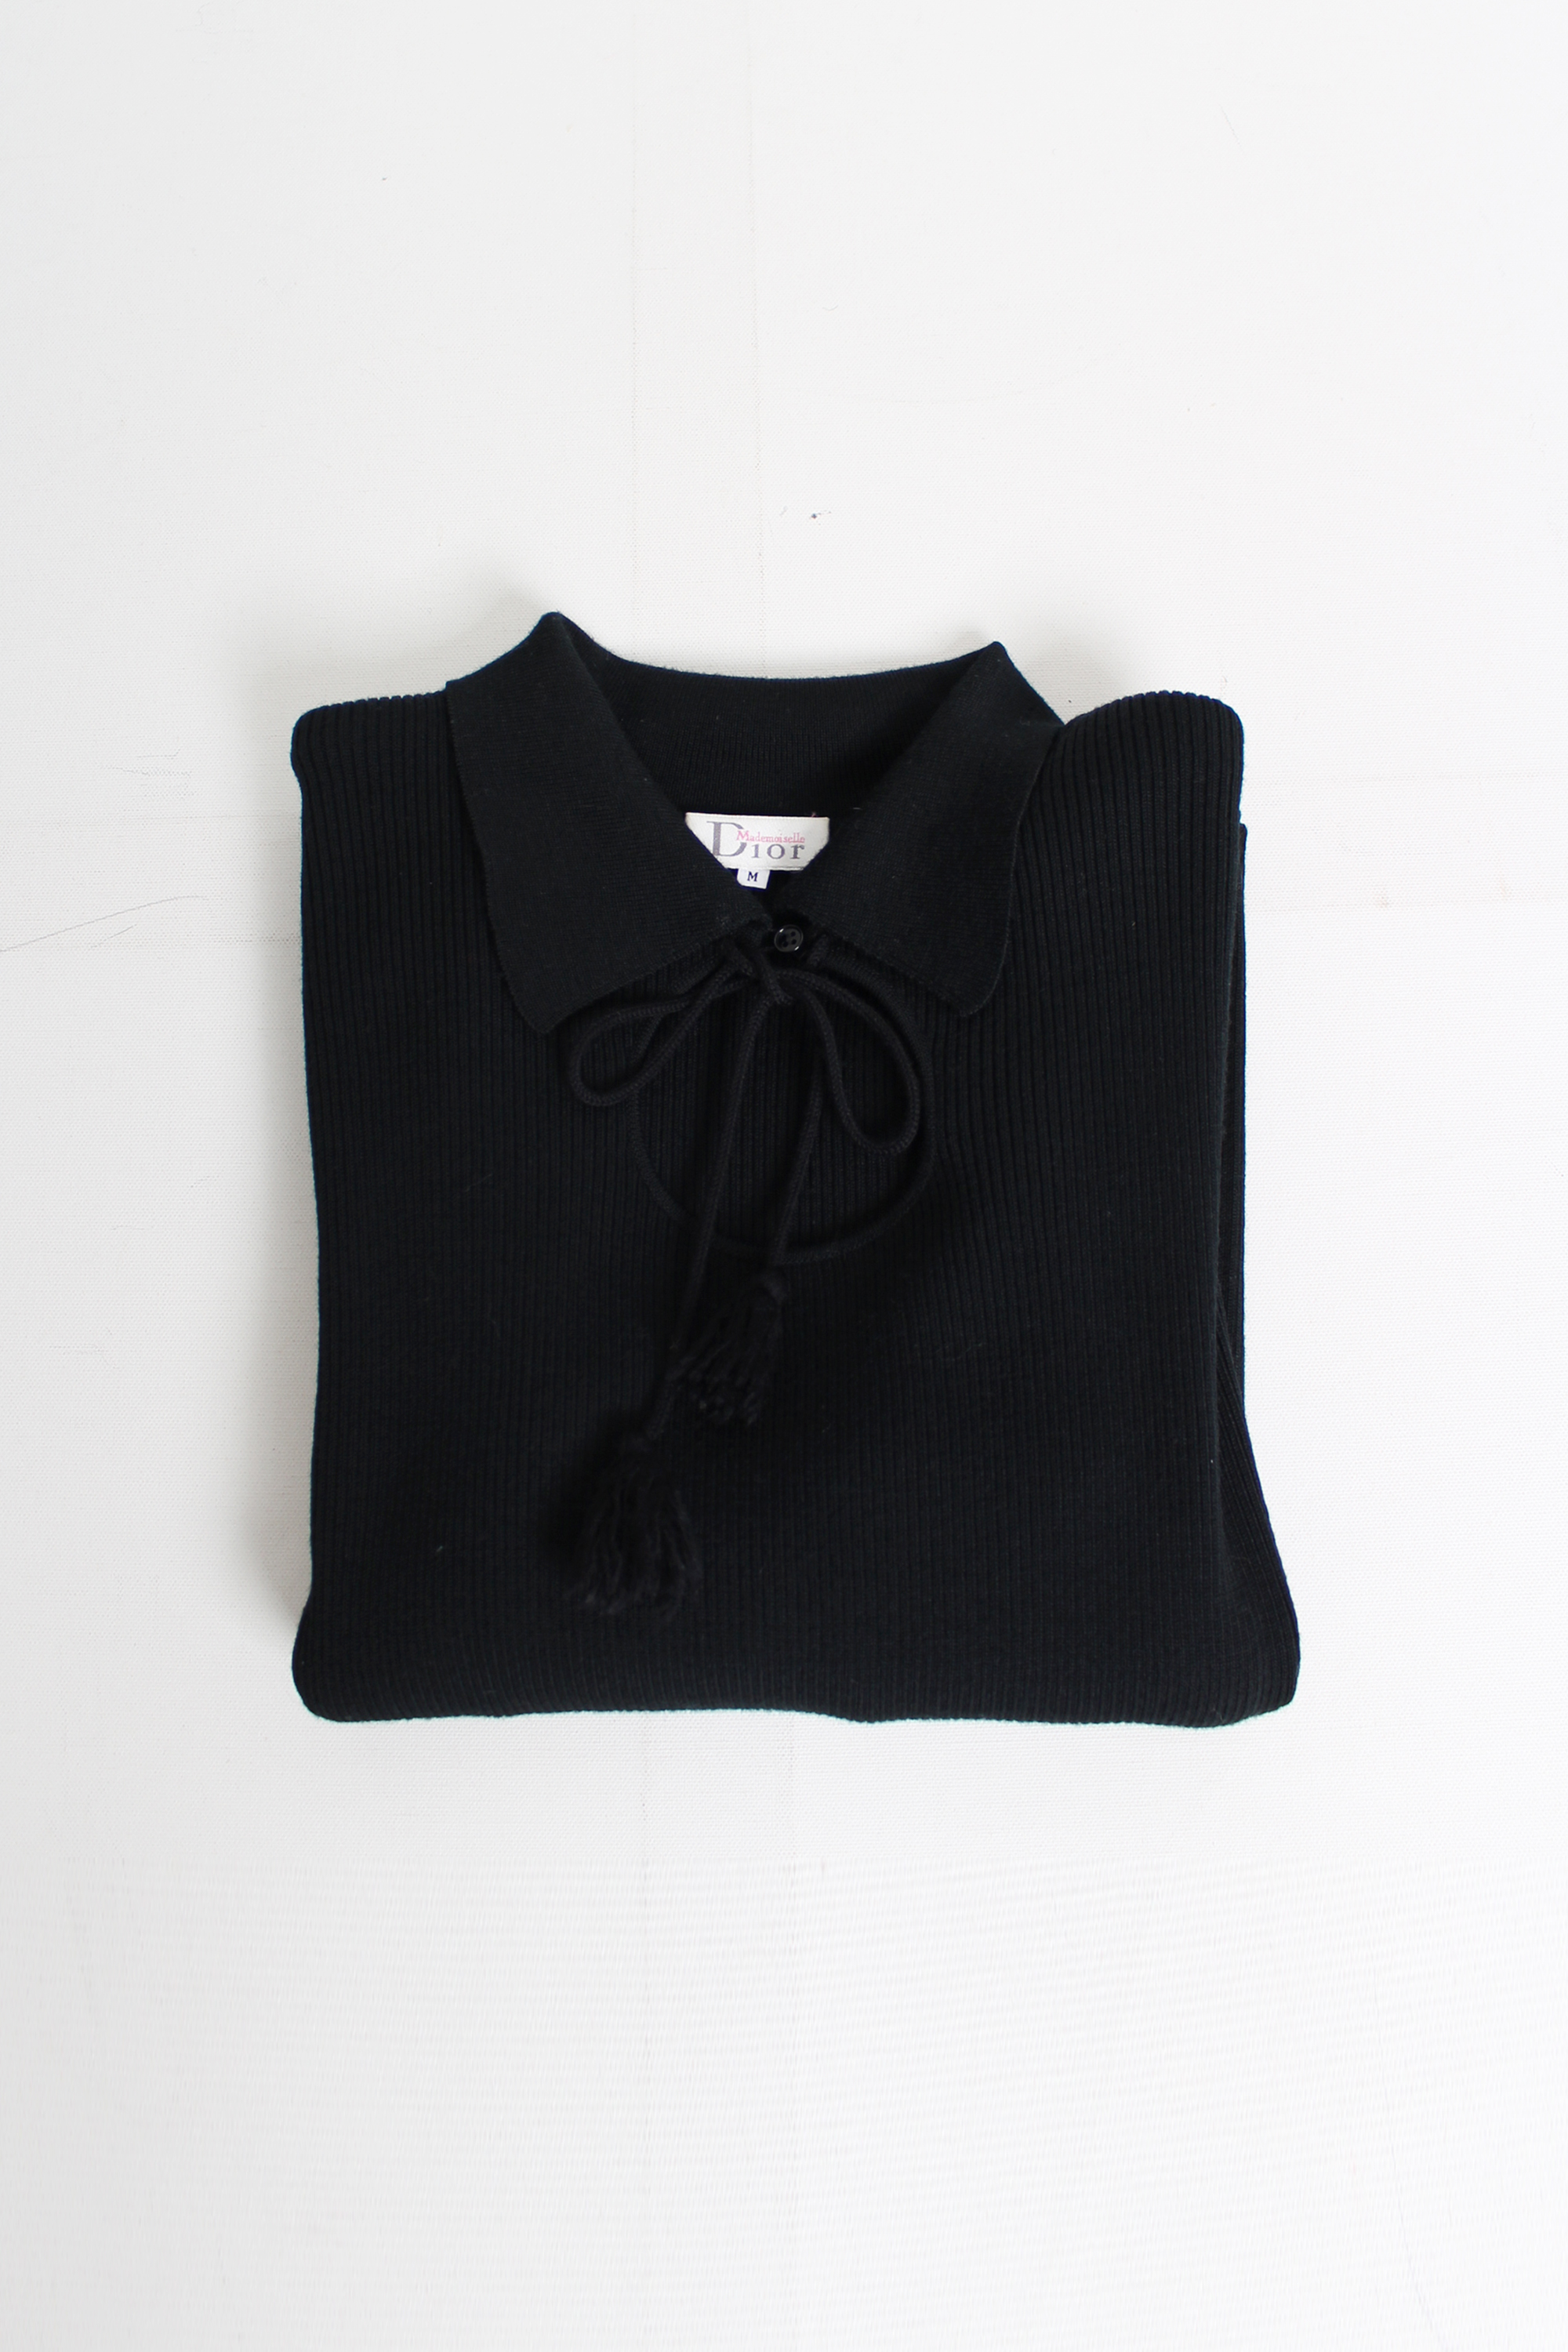 Dior collar neck knit